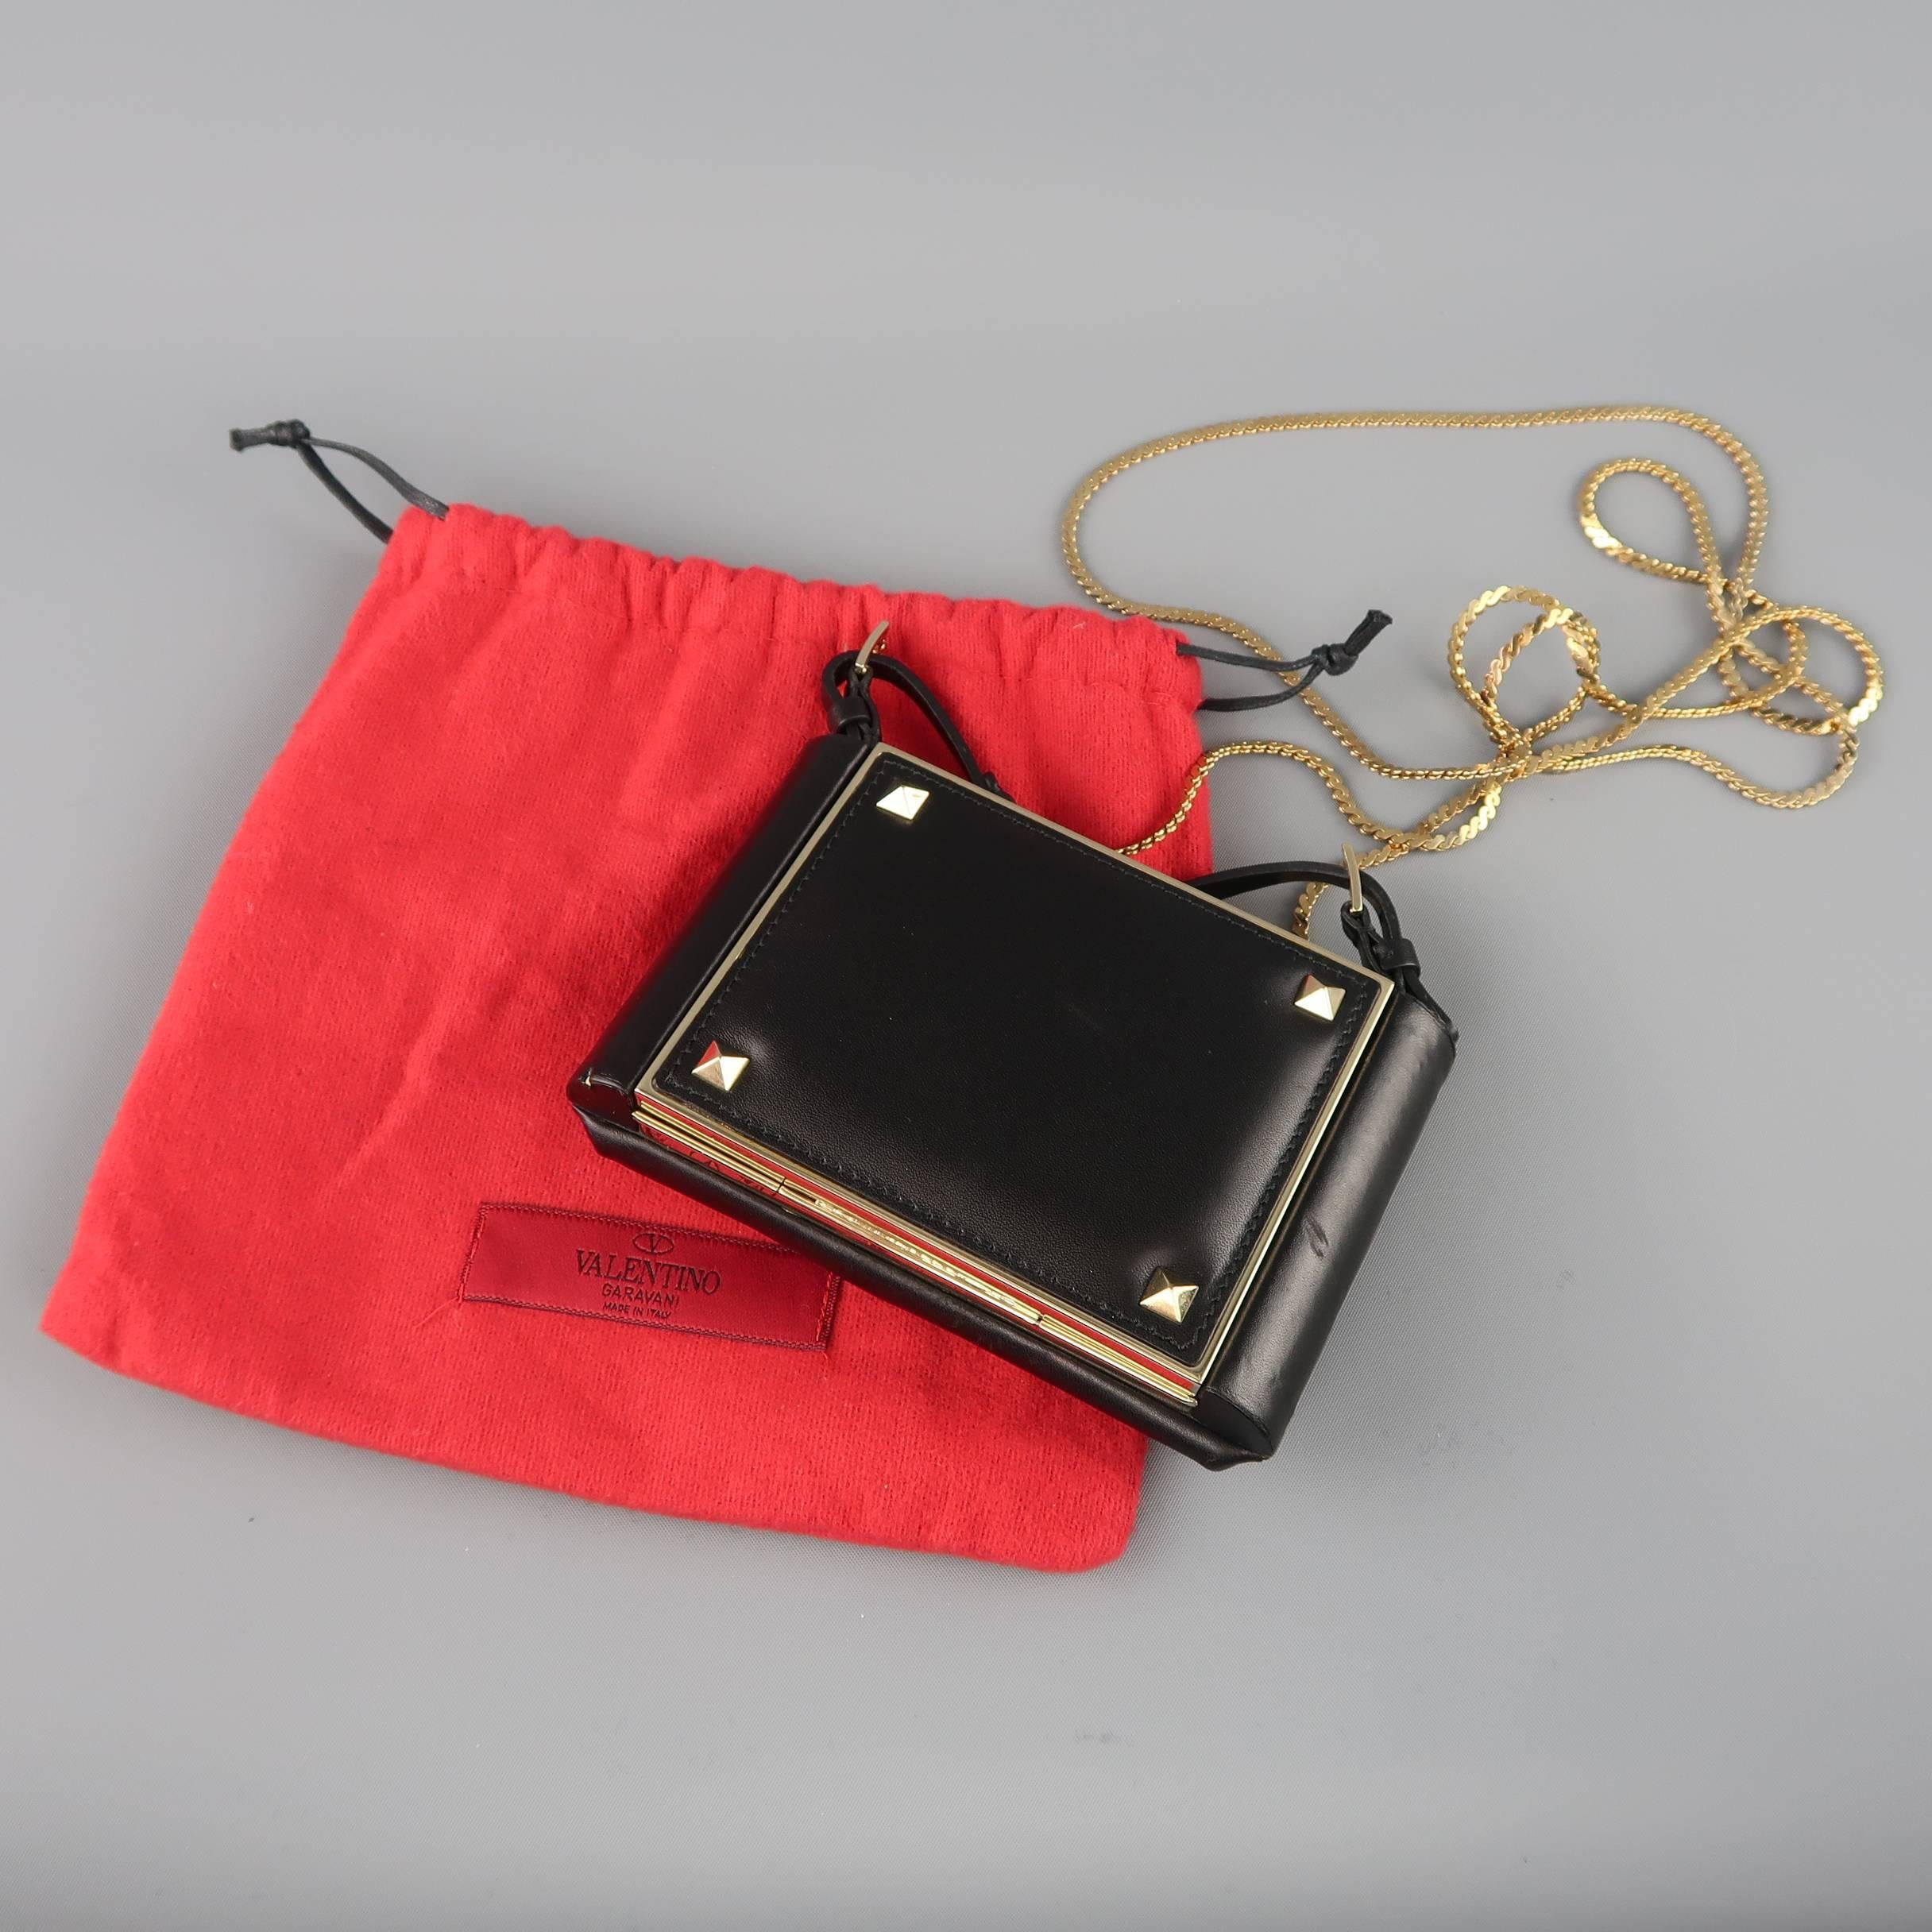 VALENTINO Black Leather Gold Studded Mini Chain Strap Evening Handbag 7